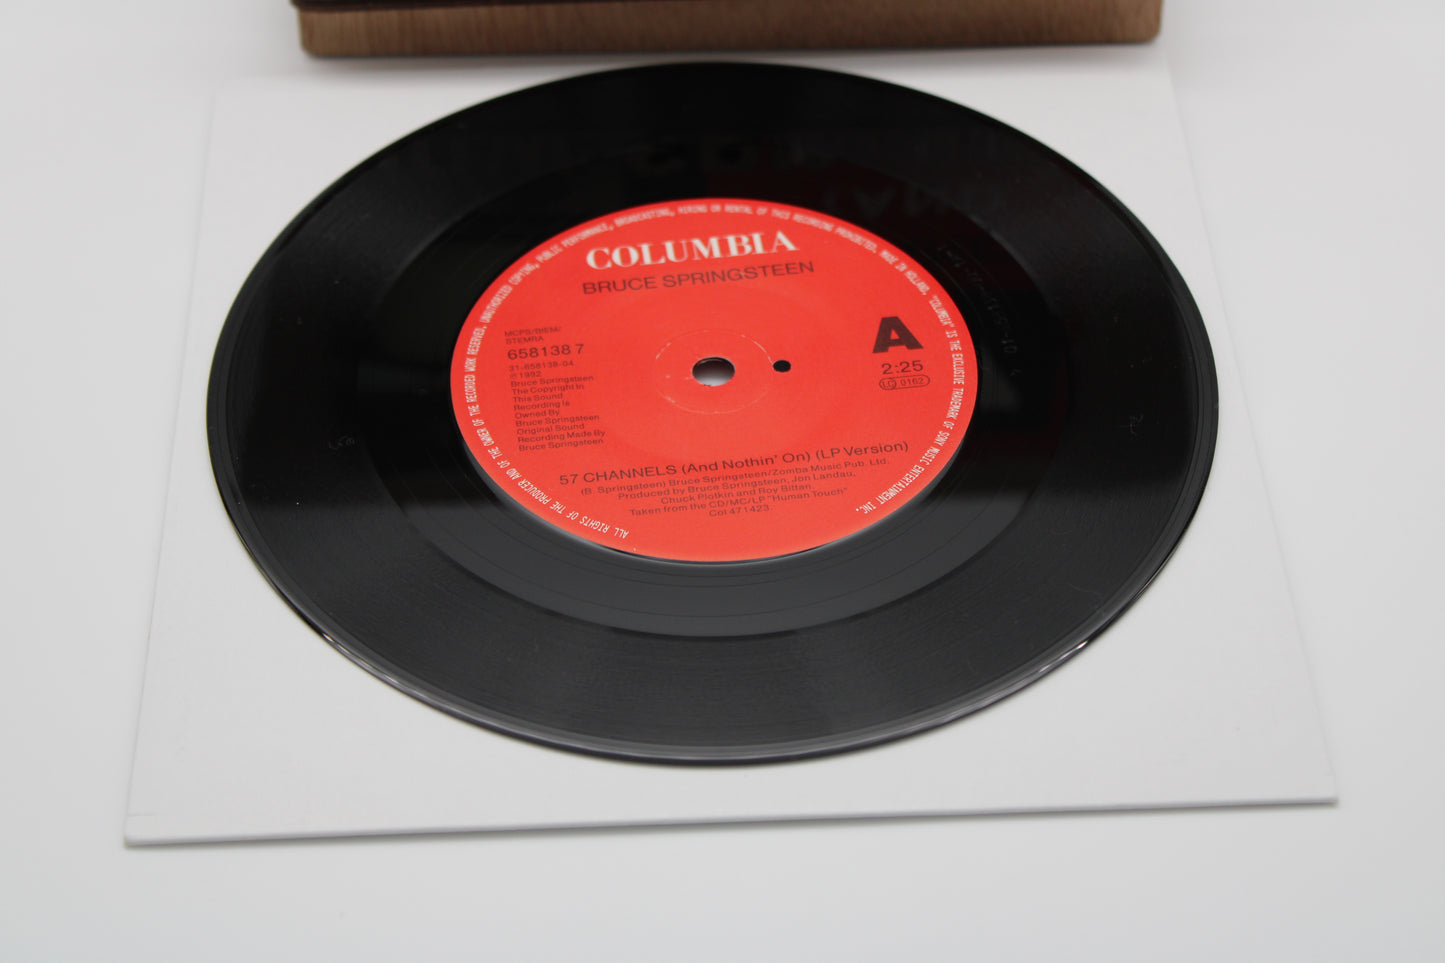 Bruce Springsteen 45 Record - Vinyl  57 Channels & 57 Channels Little Steven Mix - rare Holland Import 1992